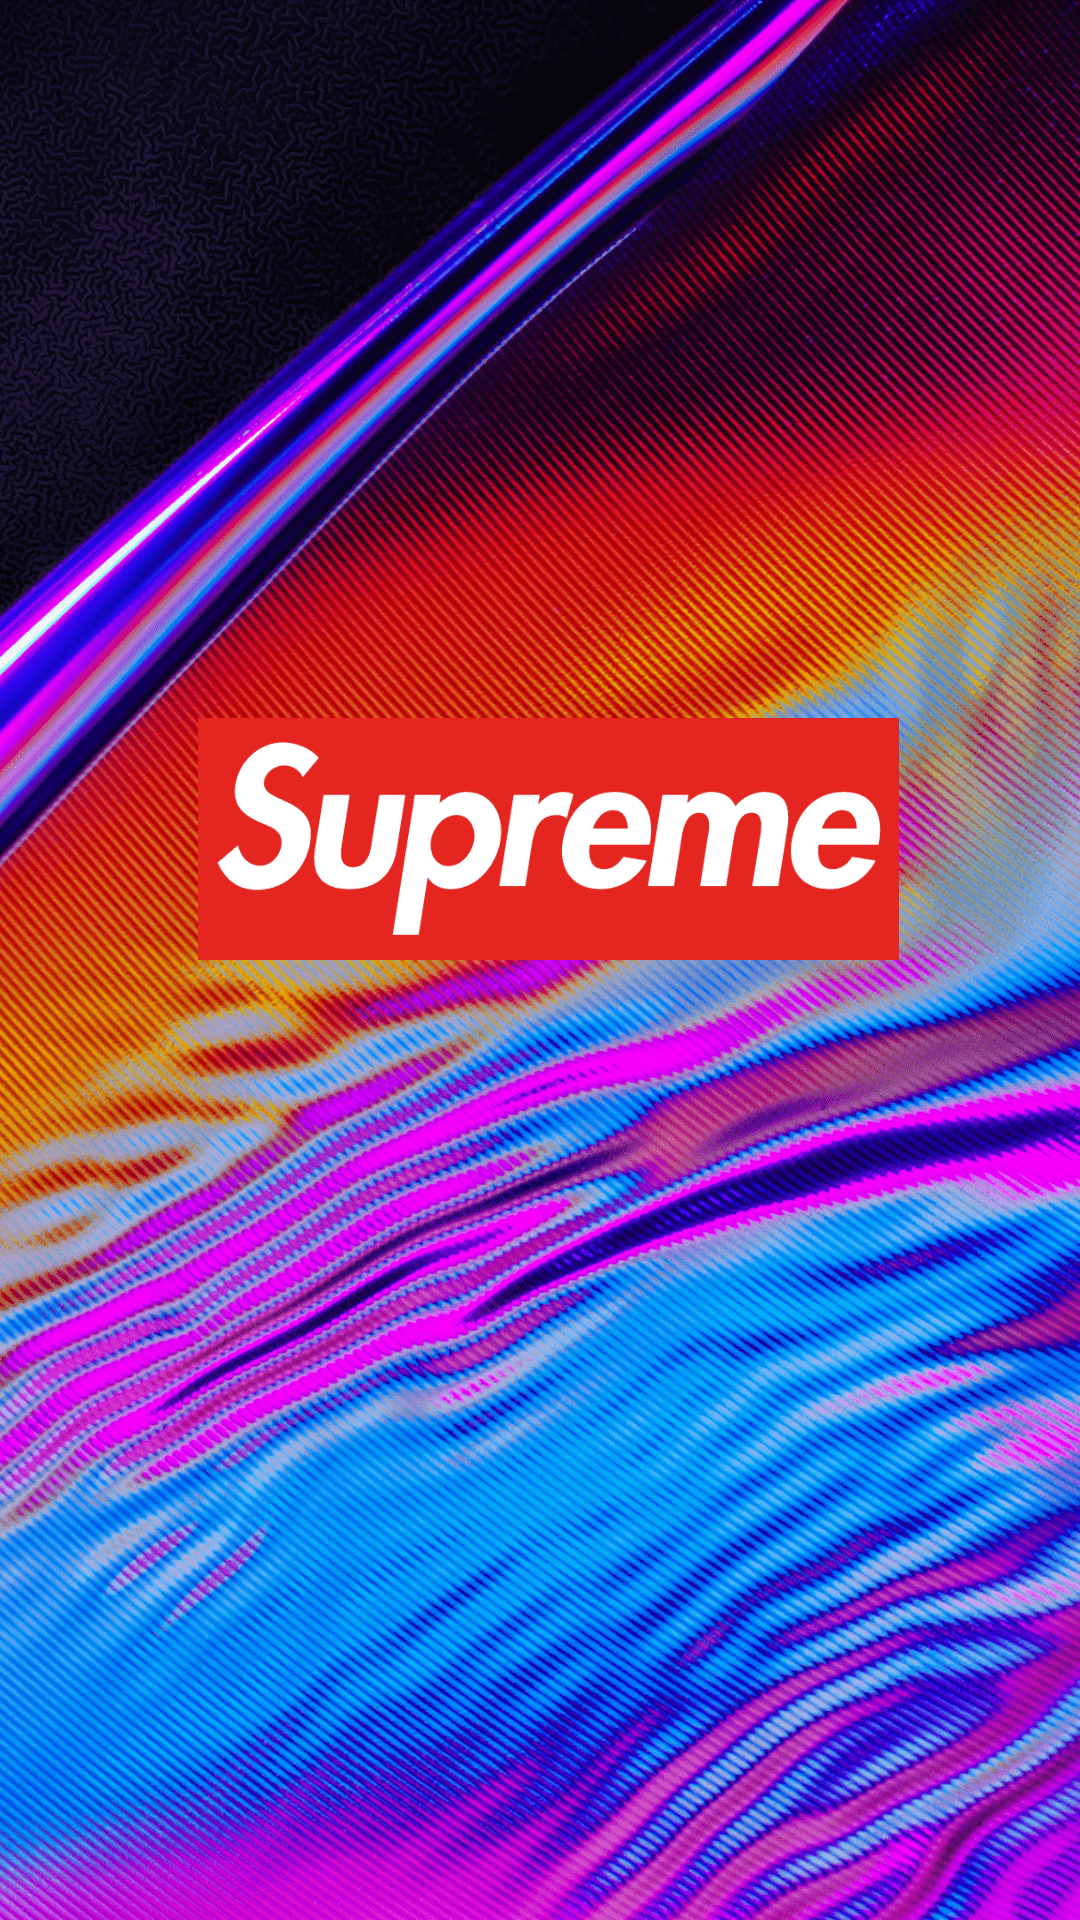 Supreme logo on a colorful background - Supreme